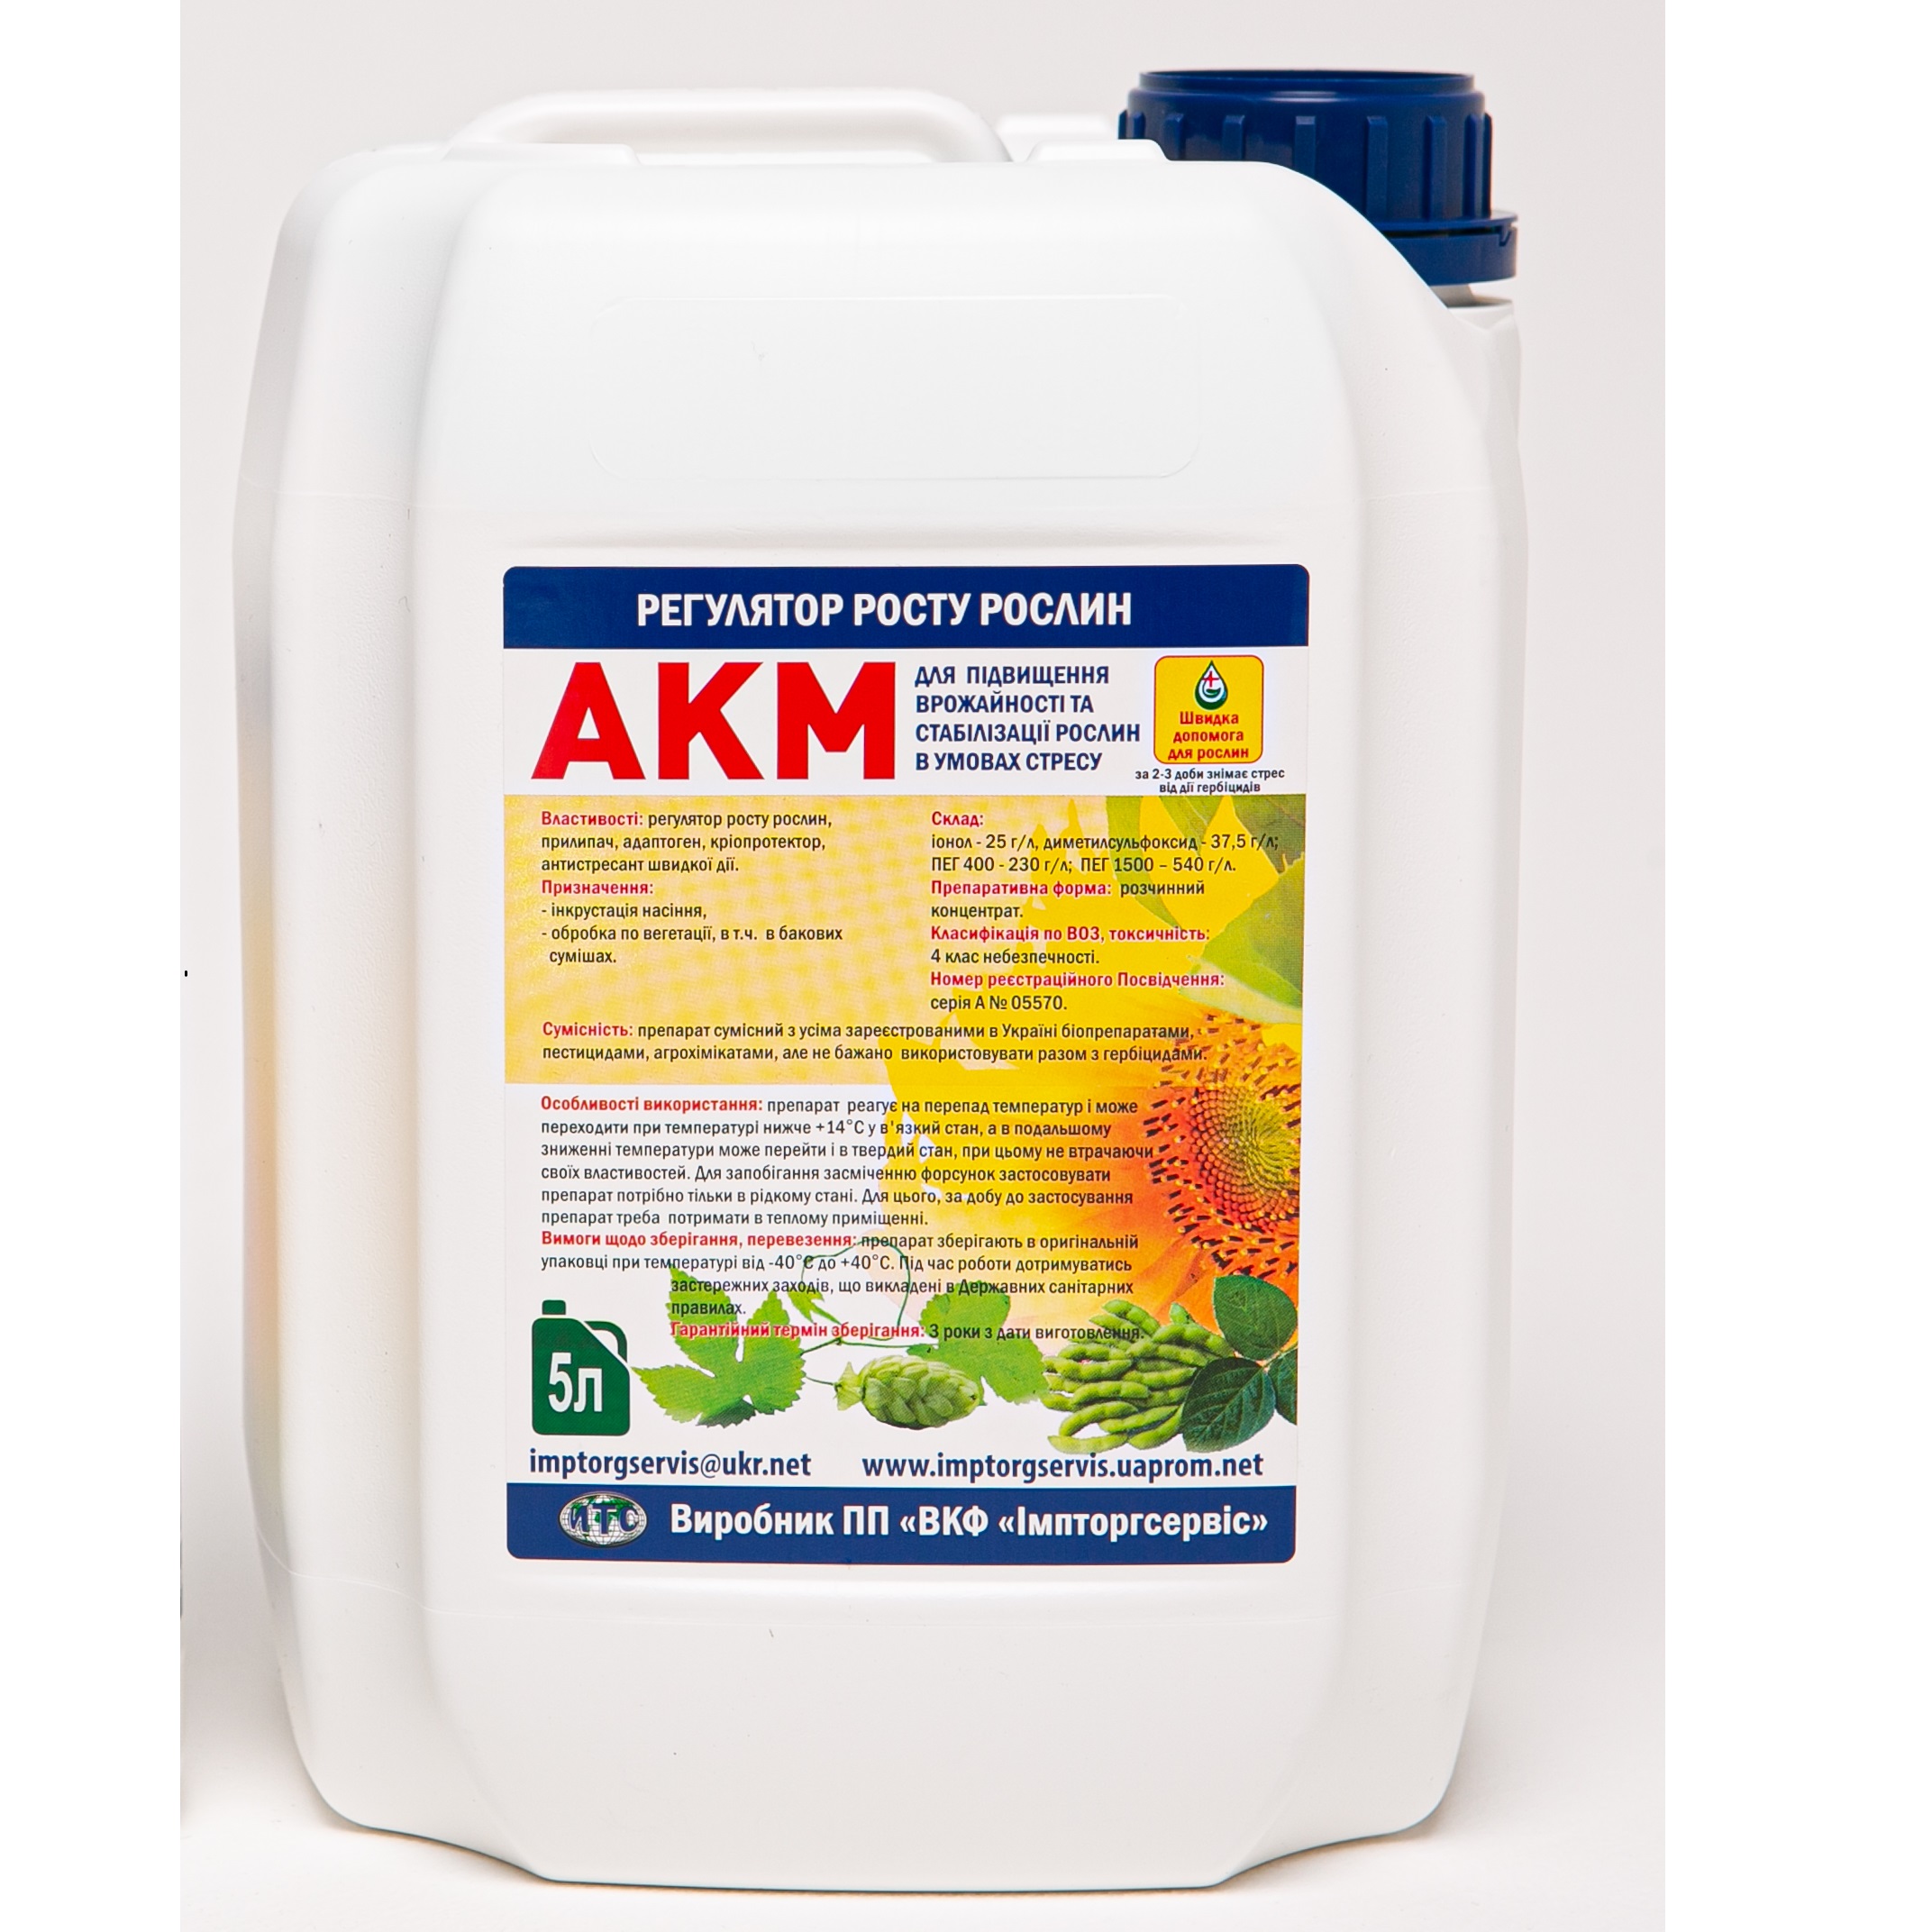 Препарат АКМ регулятор роста растений, антиоксидант